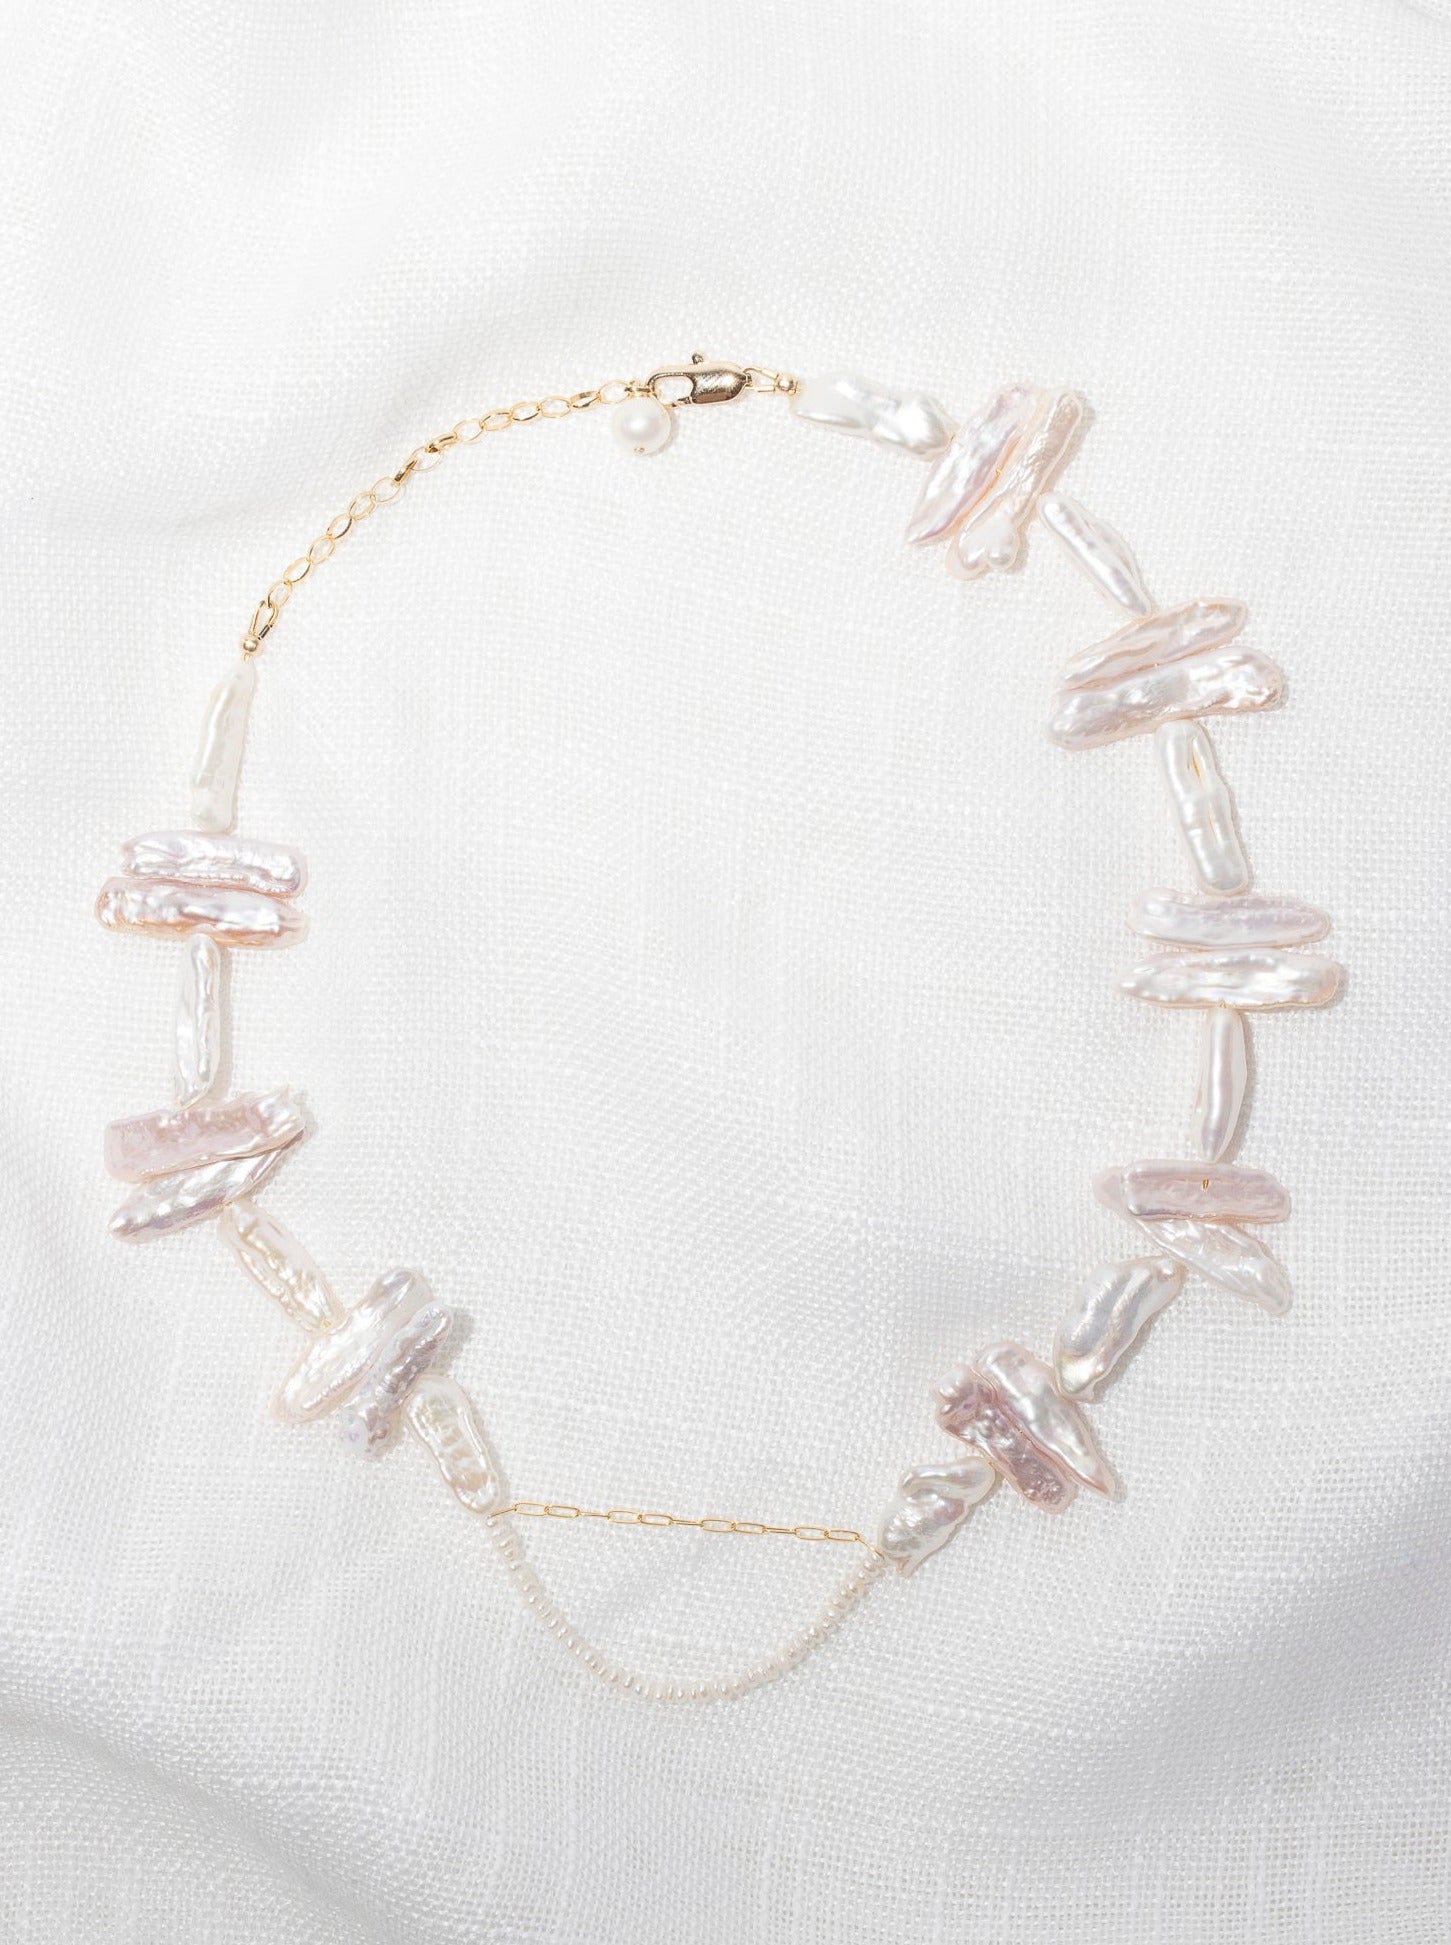 Eden's Harvest - Pink Freshwater Pearl Necklace